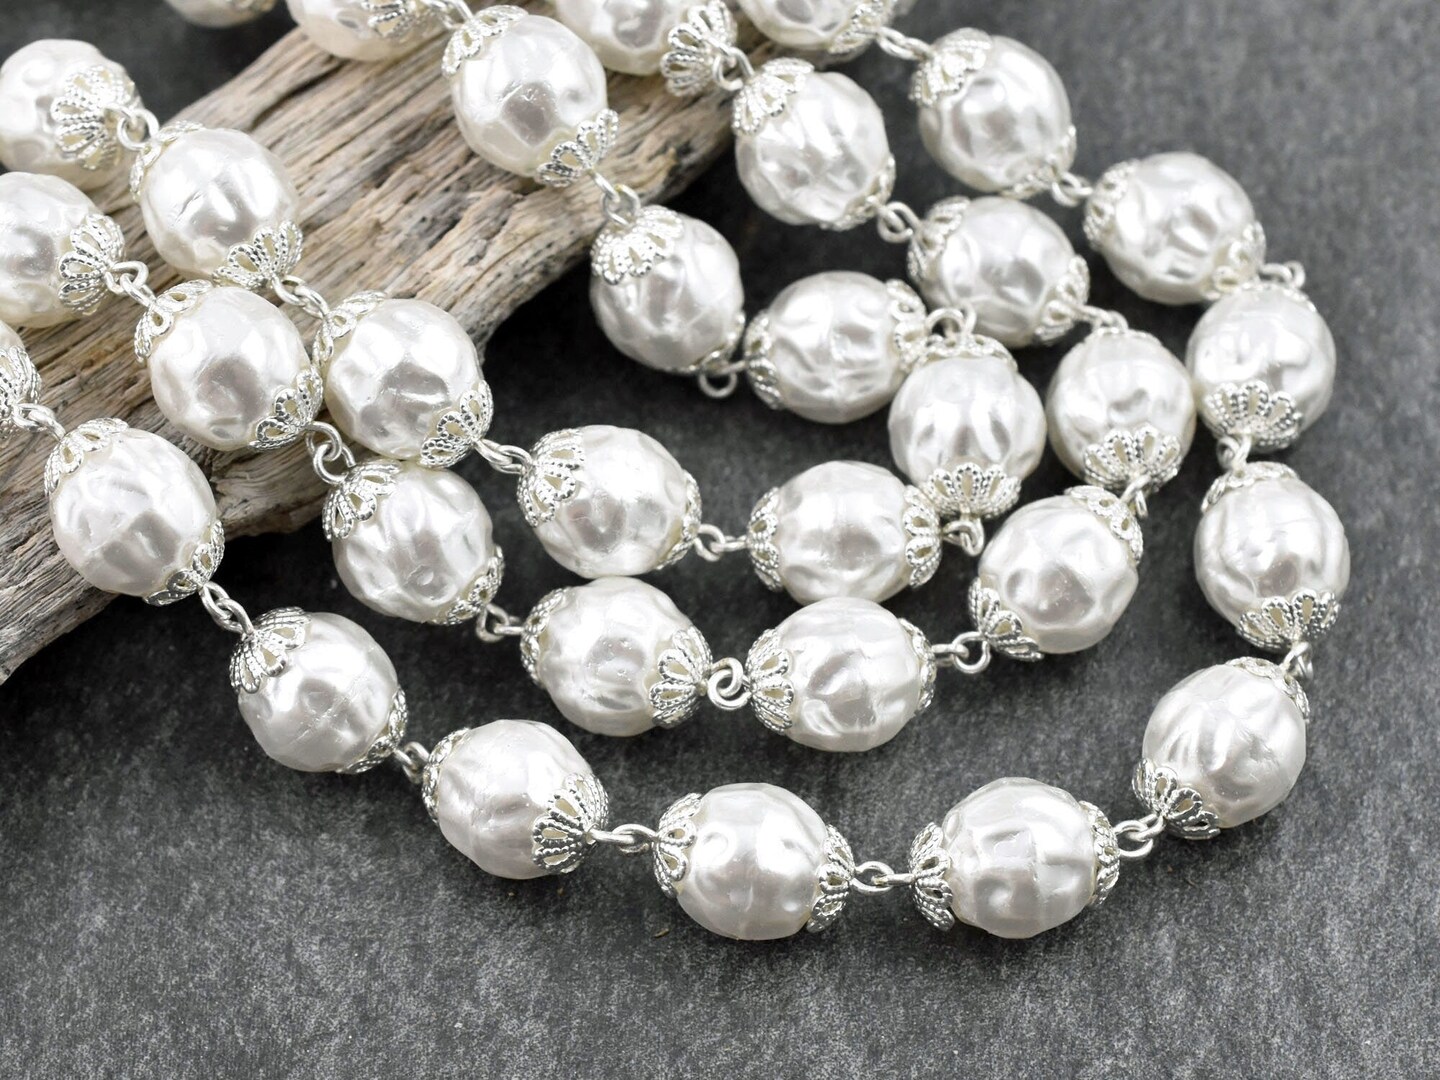 10mm Czech Glass White Baroque Pearl Chain w/ Bright Silver